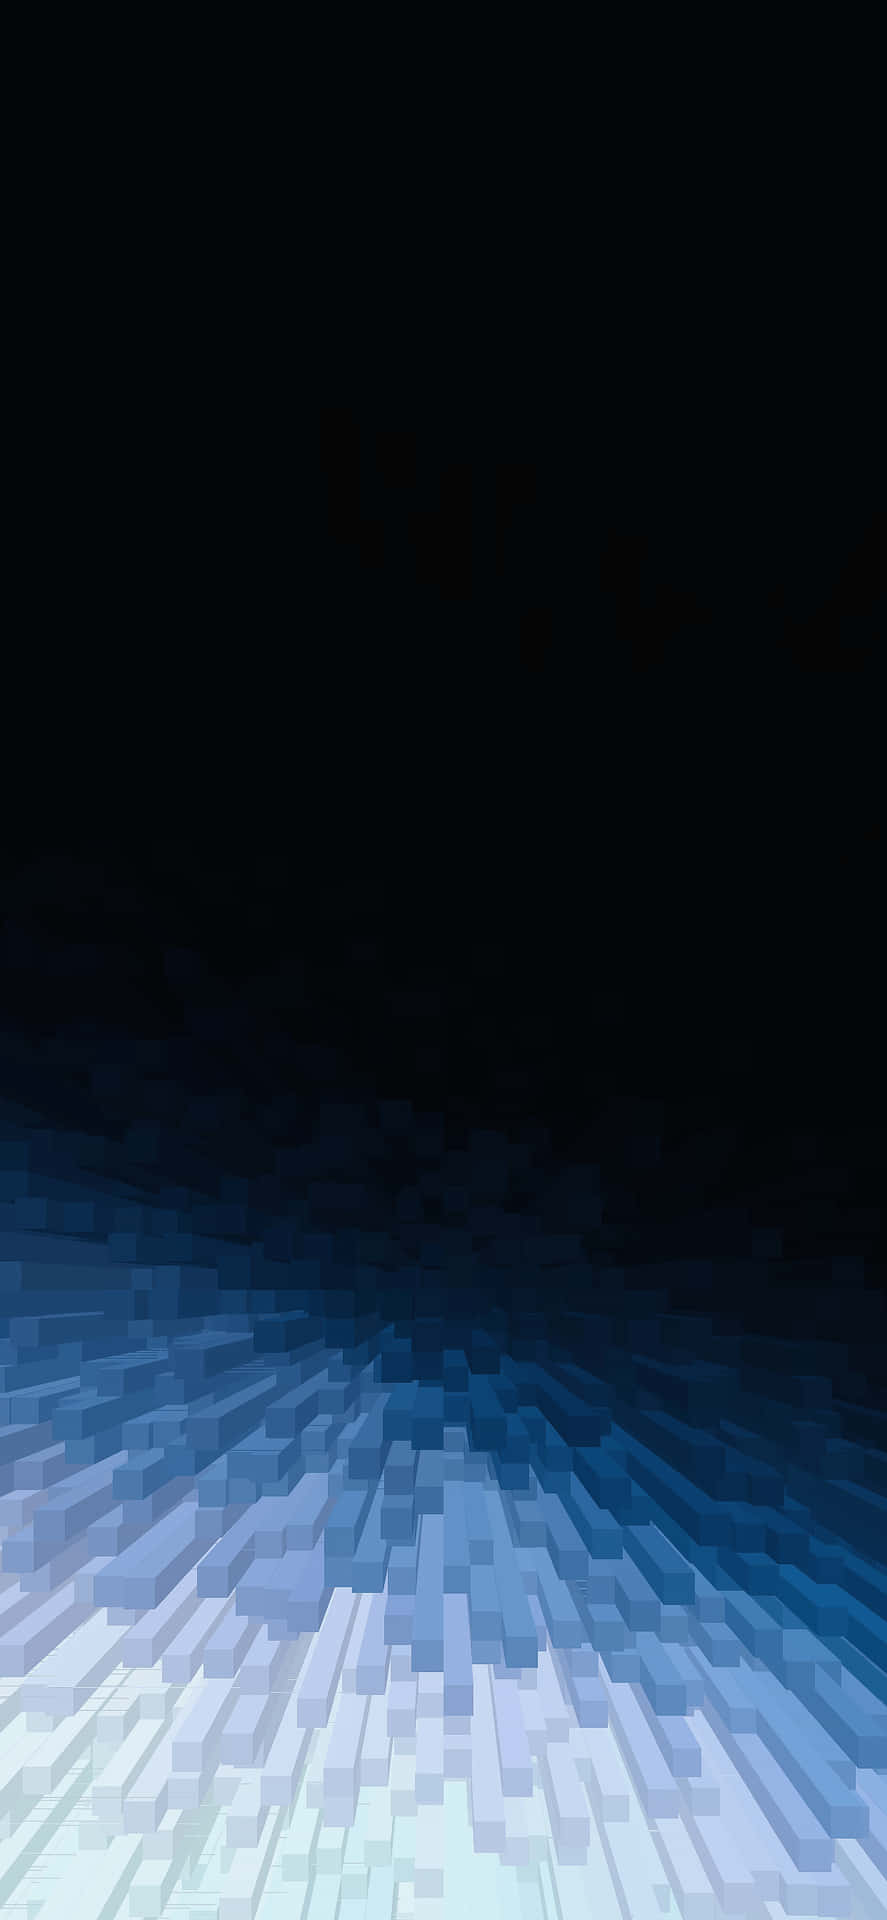 Uniphone Azul Sólido Cuidadosamente Diseñado. Fondo de pantalla